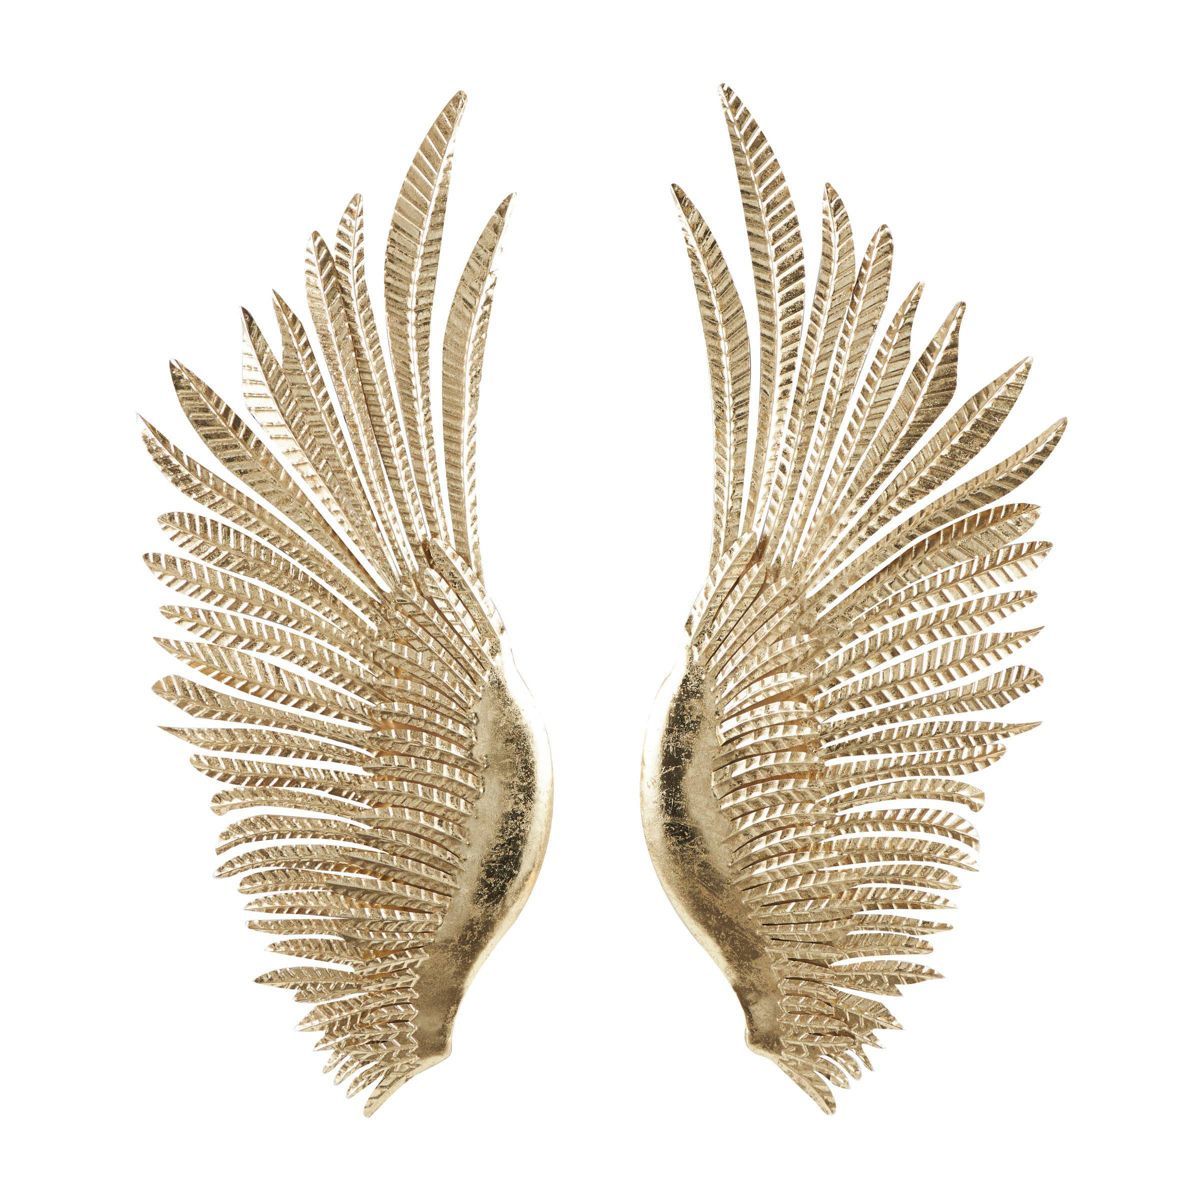 Set of 2 Metal Bird Wing Wall Decors with Textured Metallic Finish Gold - Olivia & May | Target